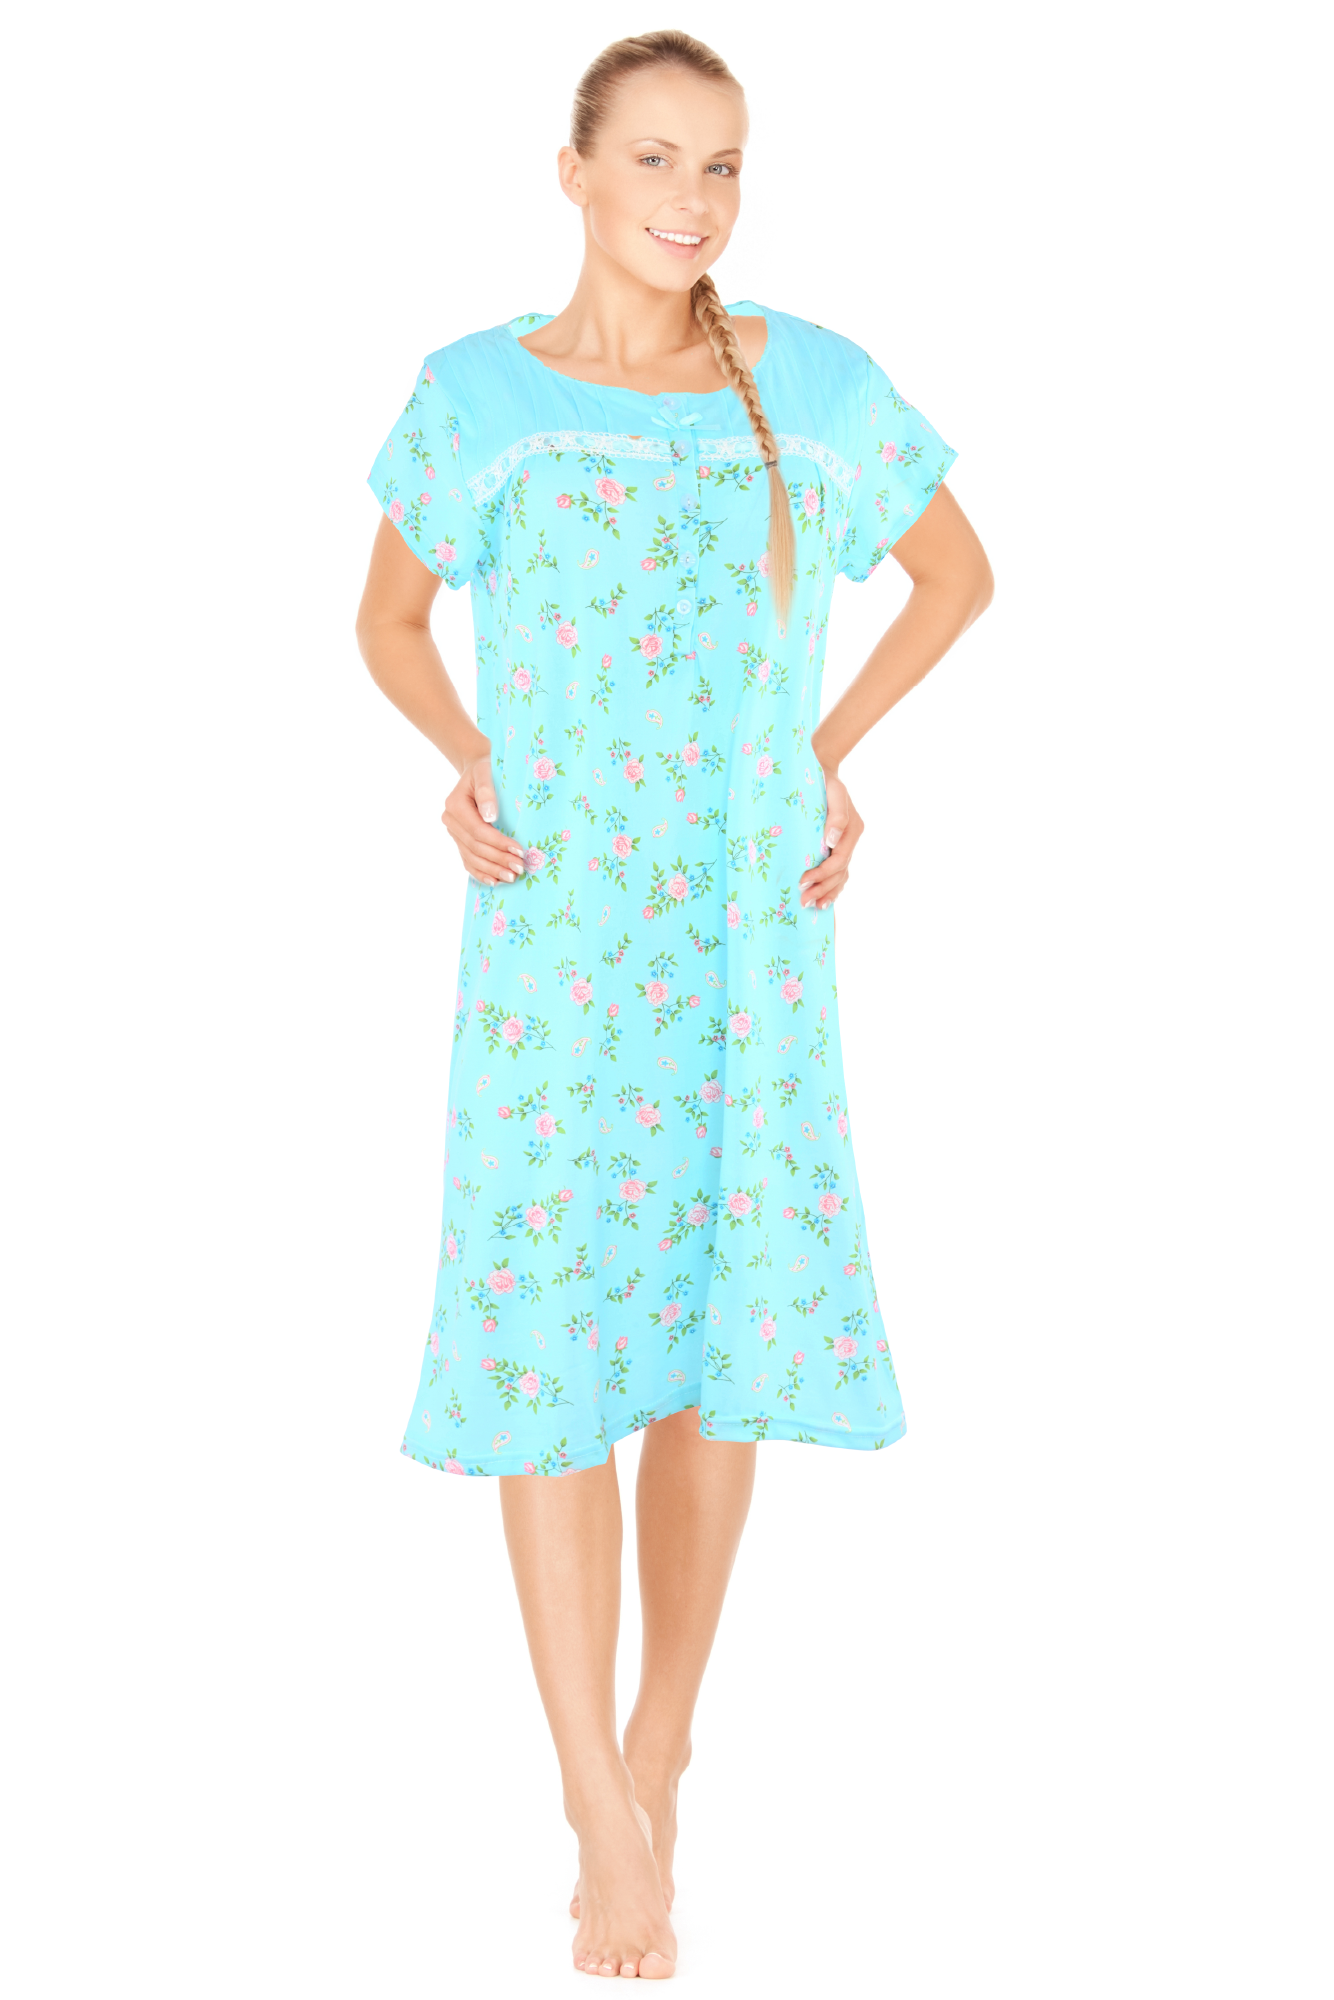 JEFFRICO Womens Short Sleeve Nightgowns Sleepwear Soft Pajama Dress Nightshirts